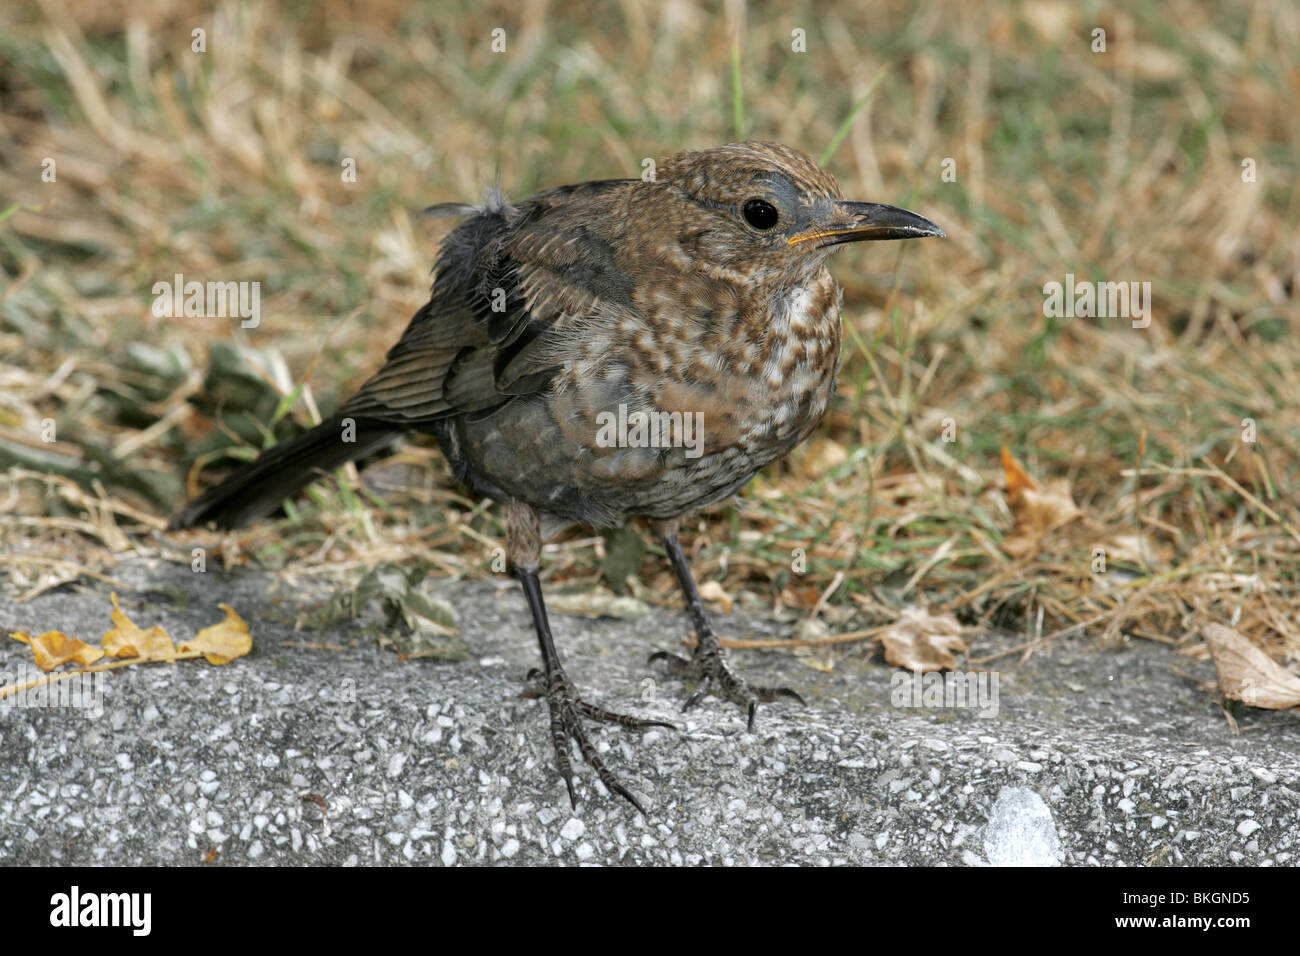 Vrouwtjes Merel zich uitschuddend aan de rand van een graspartij en vijverrand. A Female Blackbird shaking out her feathers at the border of a stretch of grass and pond. Stock Photo